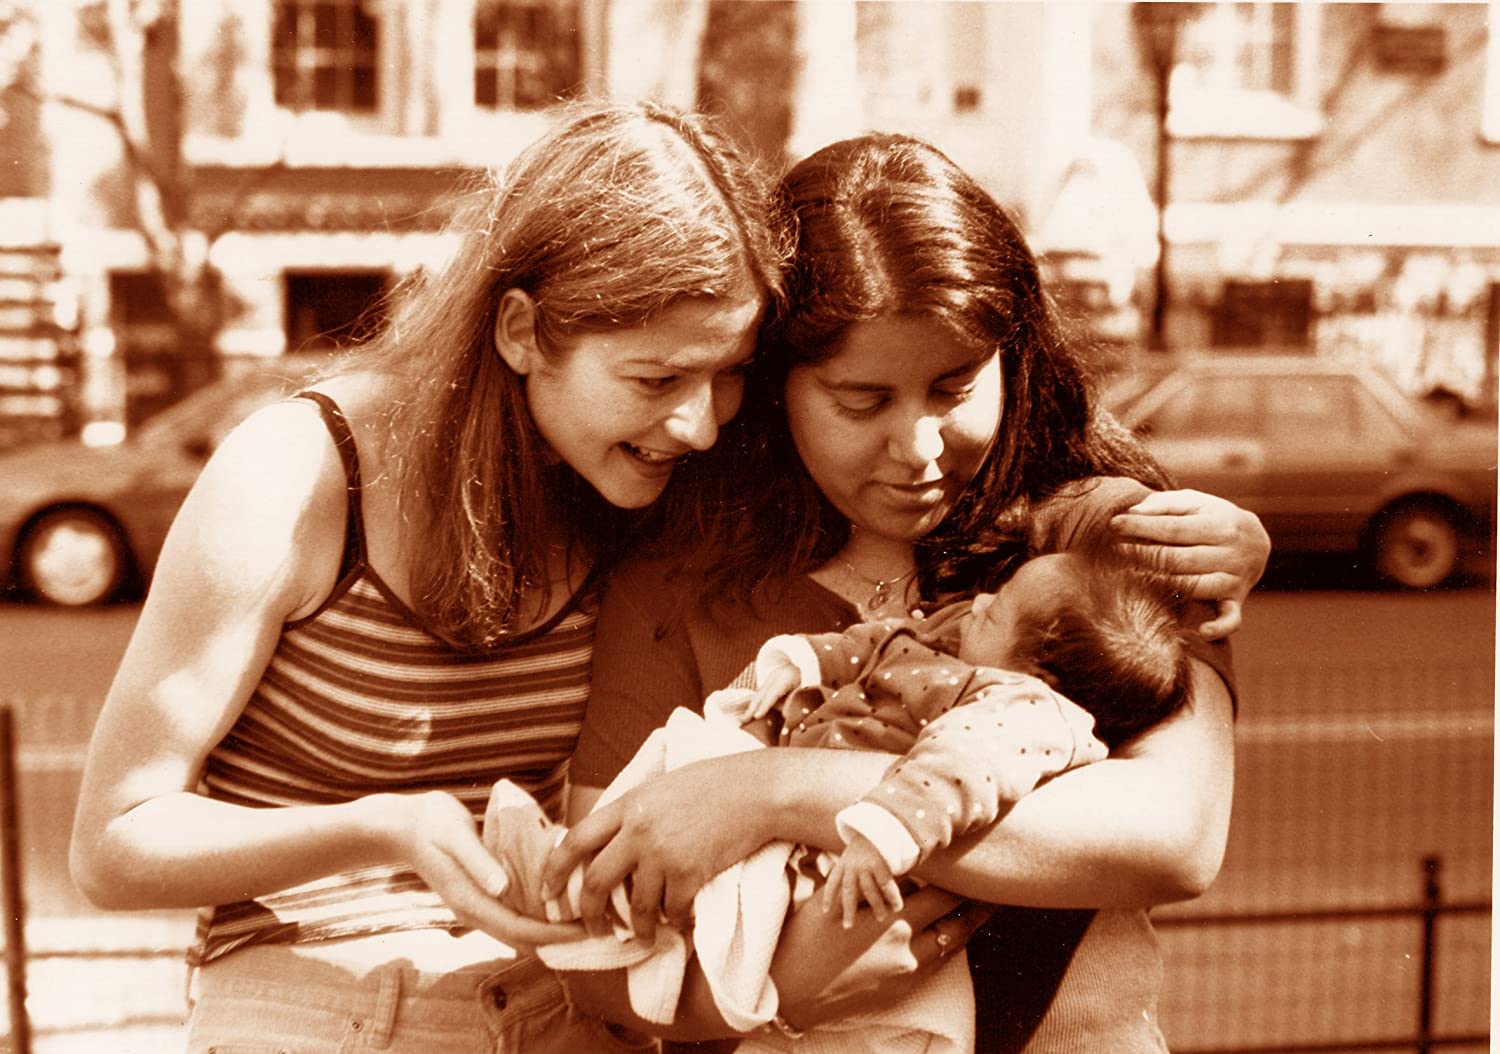 Screenshot of Reena, her girlfriend Lisa, and their baby